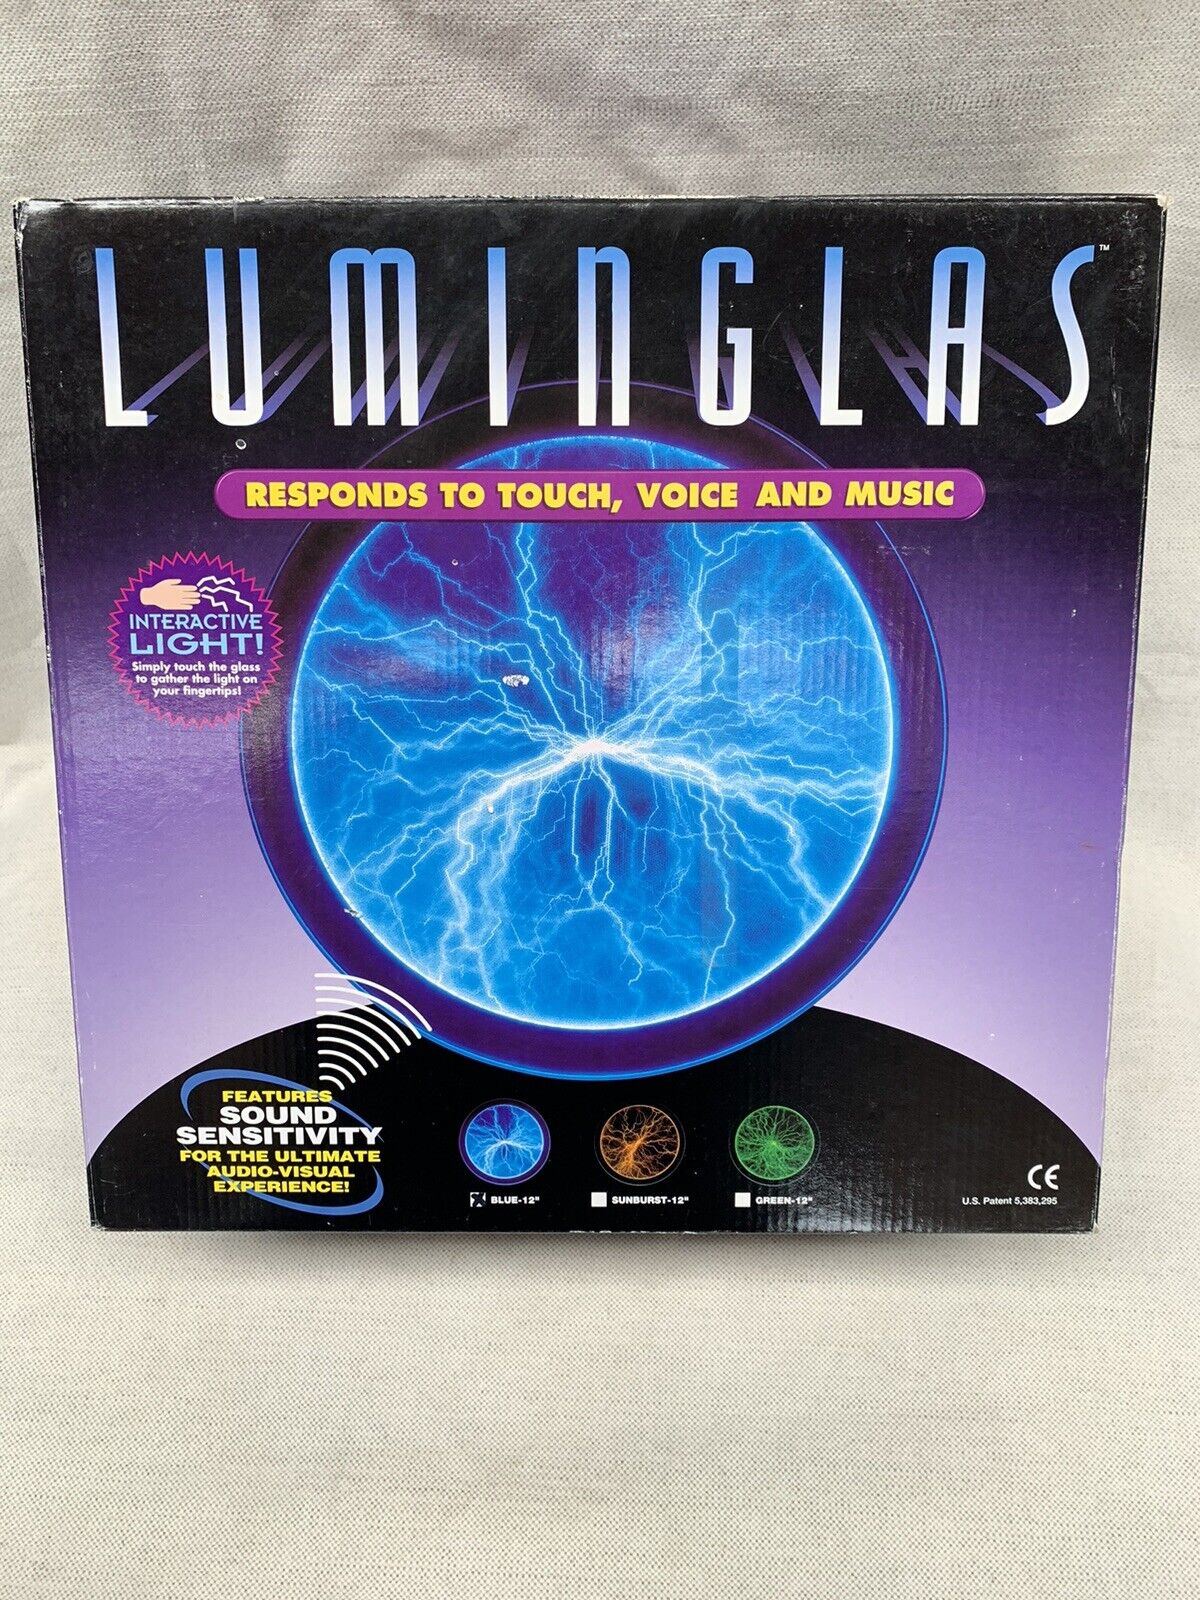 Vintage Luminglas Blue Plasma Light 12 Inch Responds to Touch Voice Music Origin